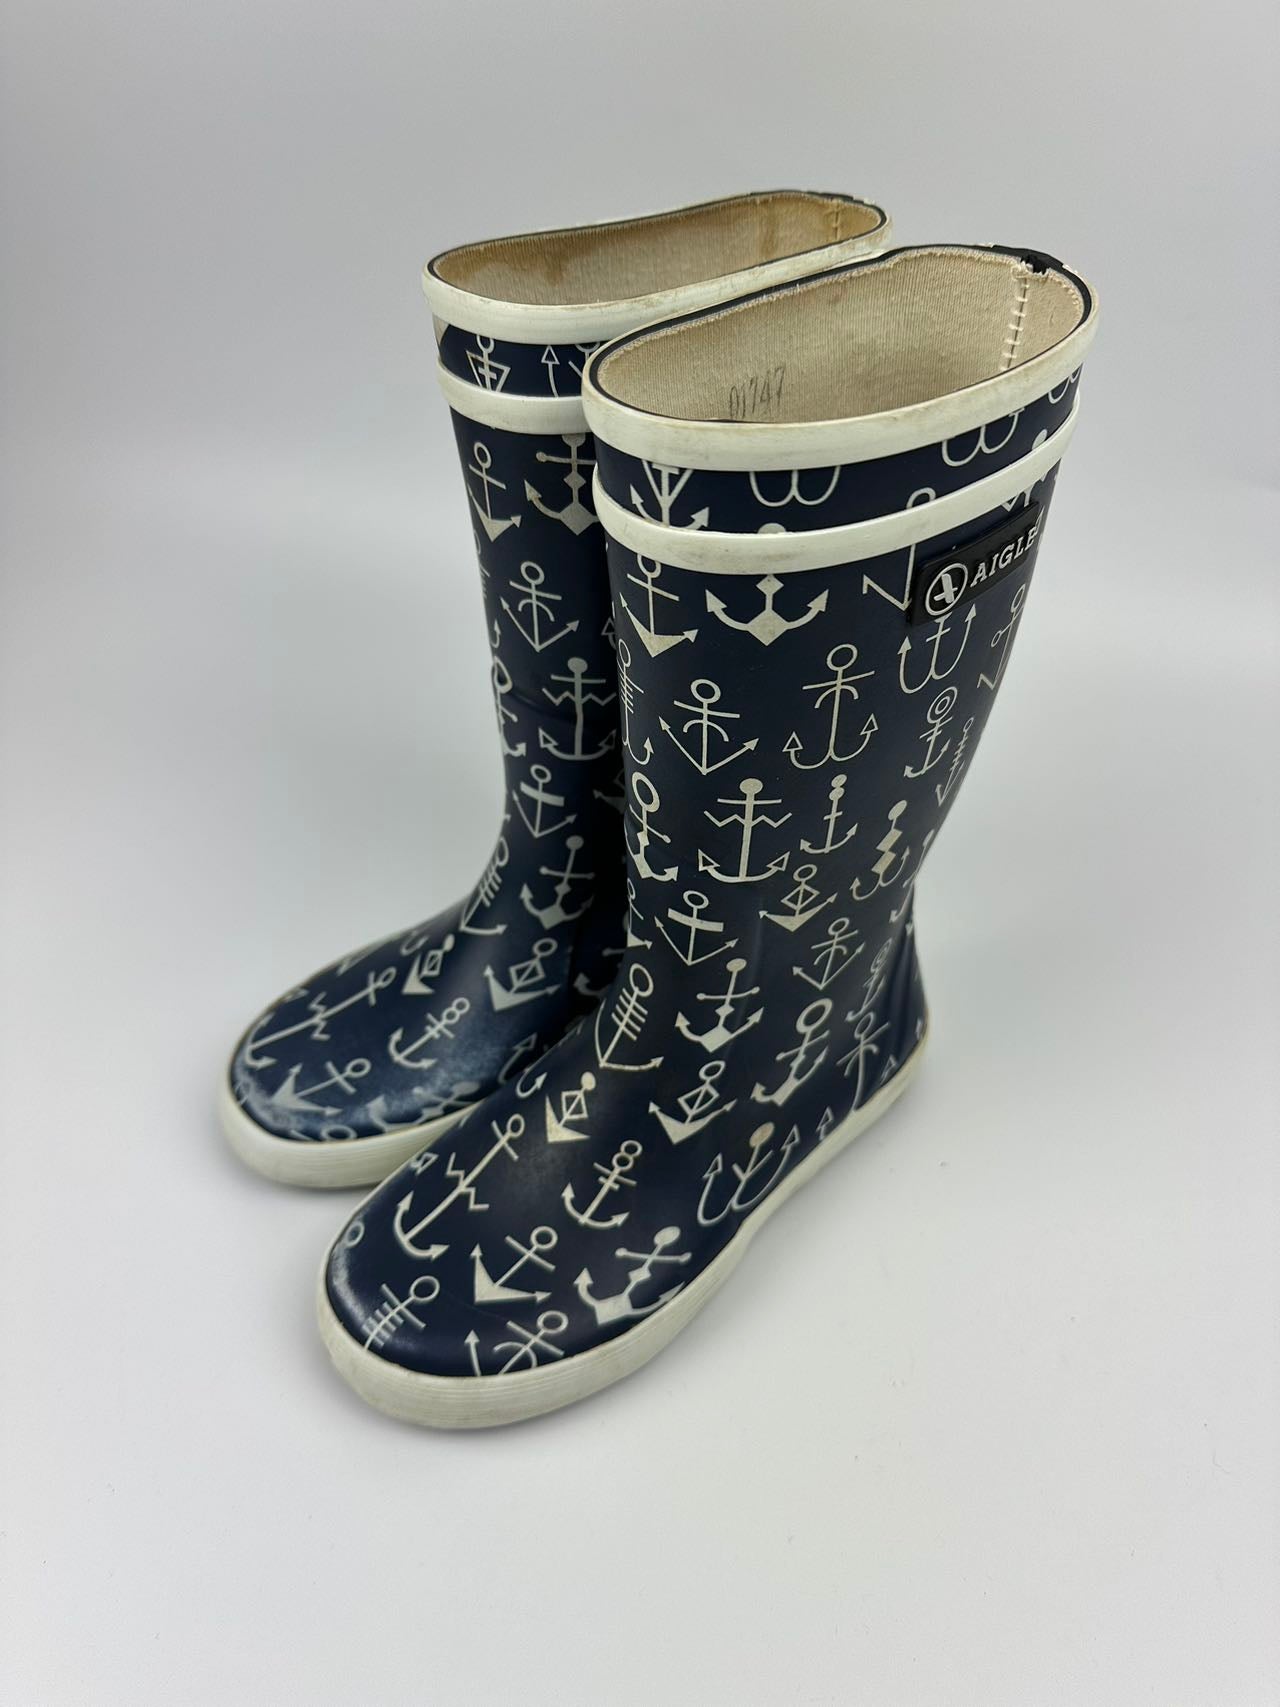 Aigle Rain Boots (US12)-Toddler